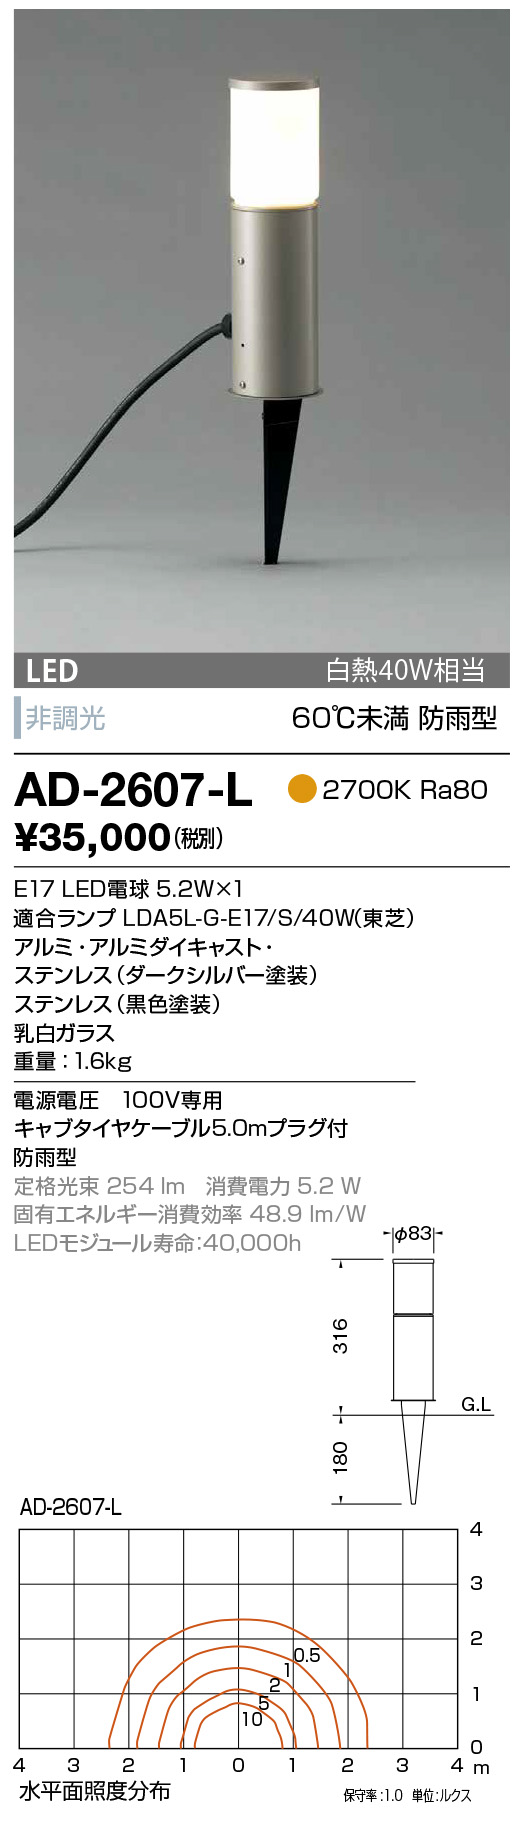 AD-2607-L(山田照明) 商品詳細 ～ 照明器具・換気扇他、電設資材販売のブライト